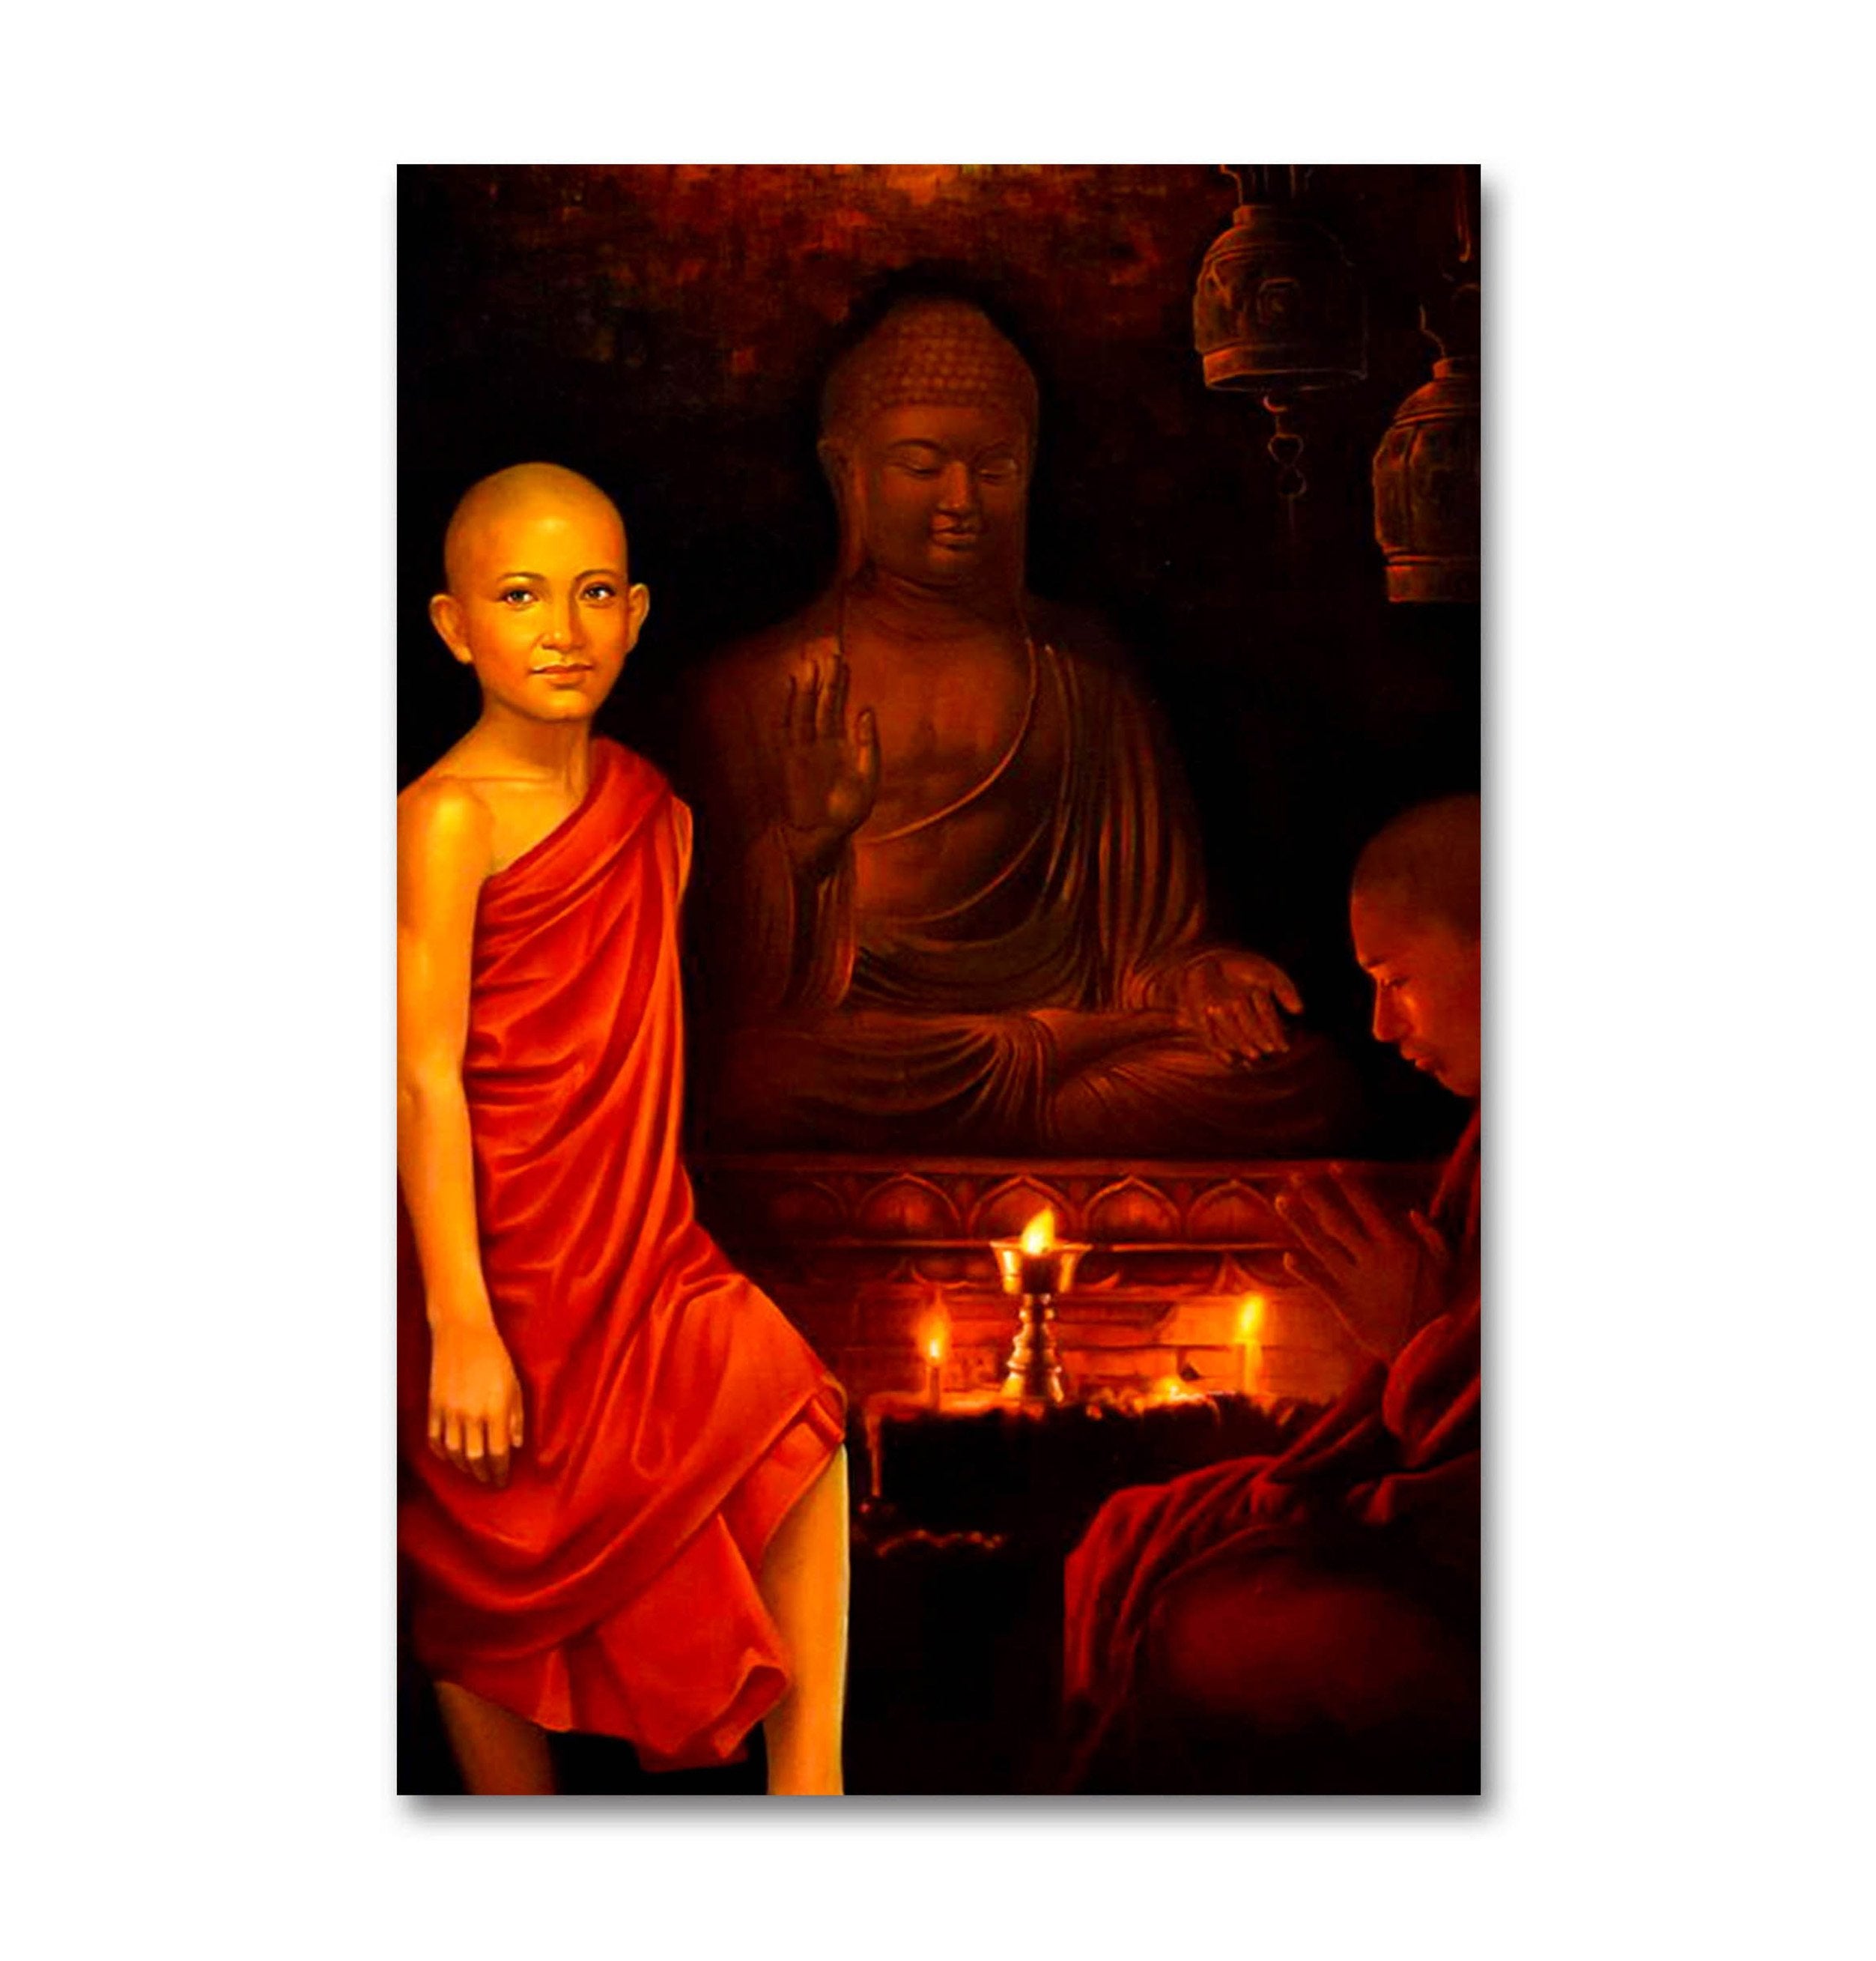 Following Buddhas steps